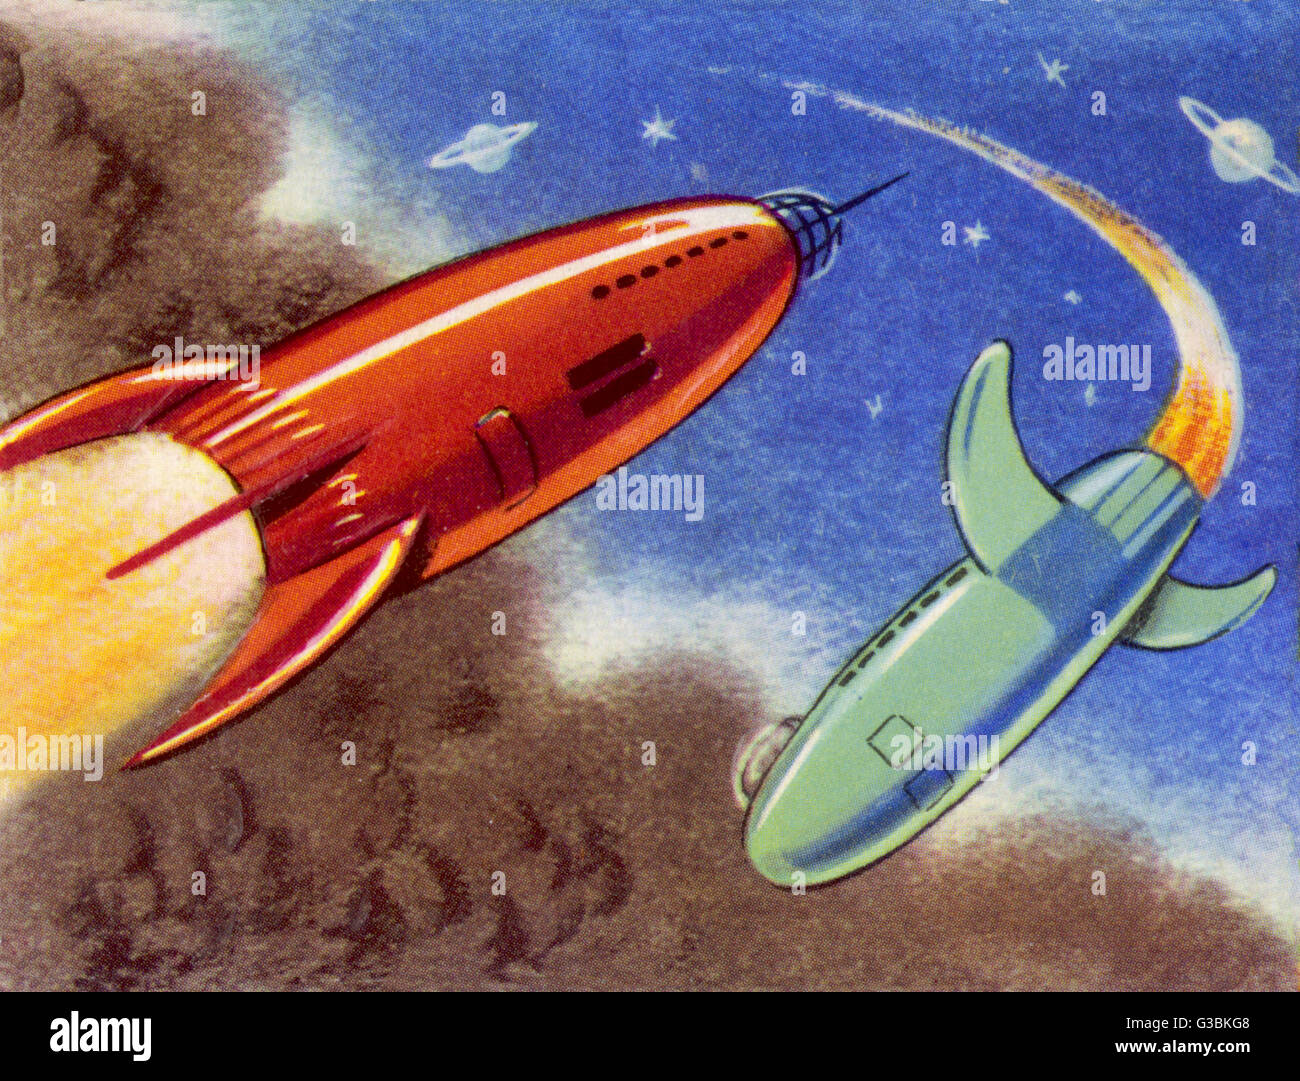 Retro Futuristic Art: Space Illustrations Show Visions Of The